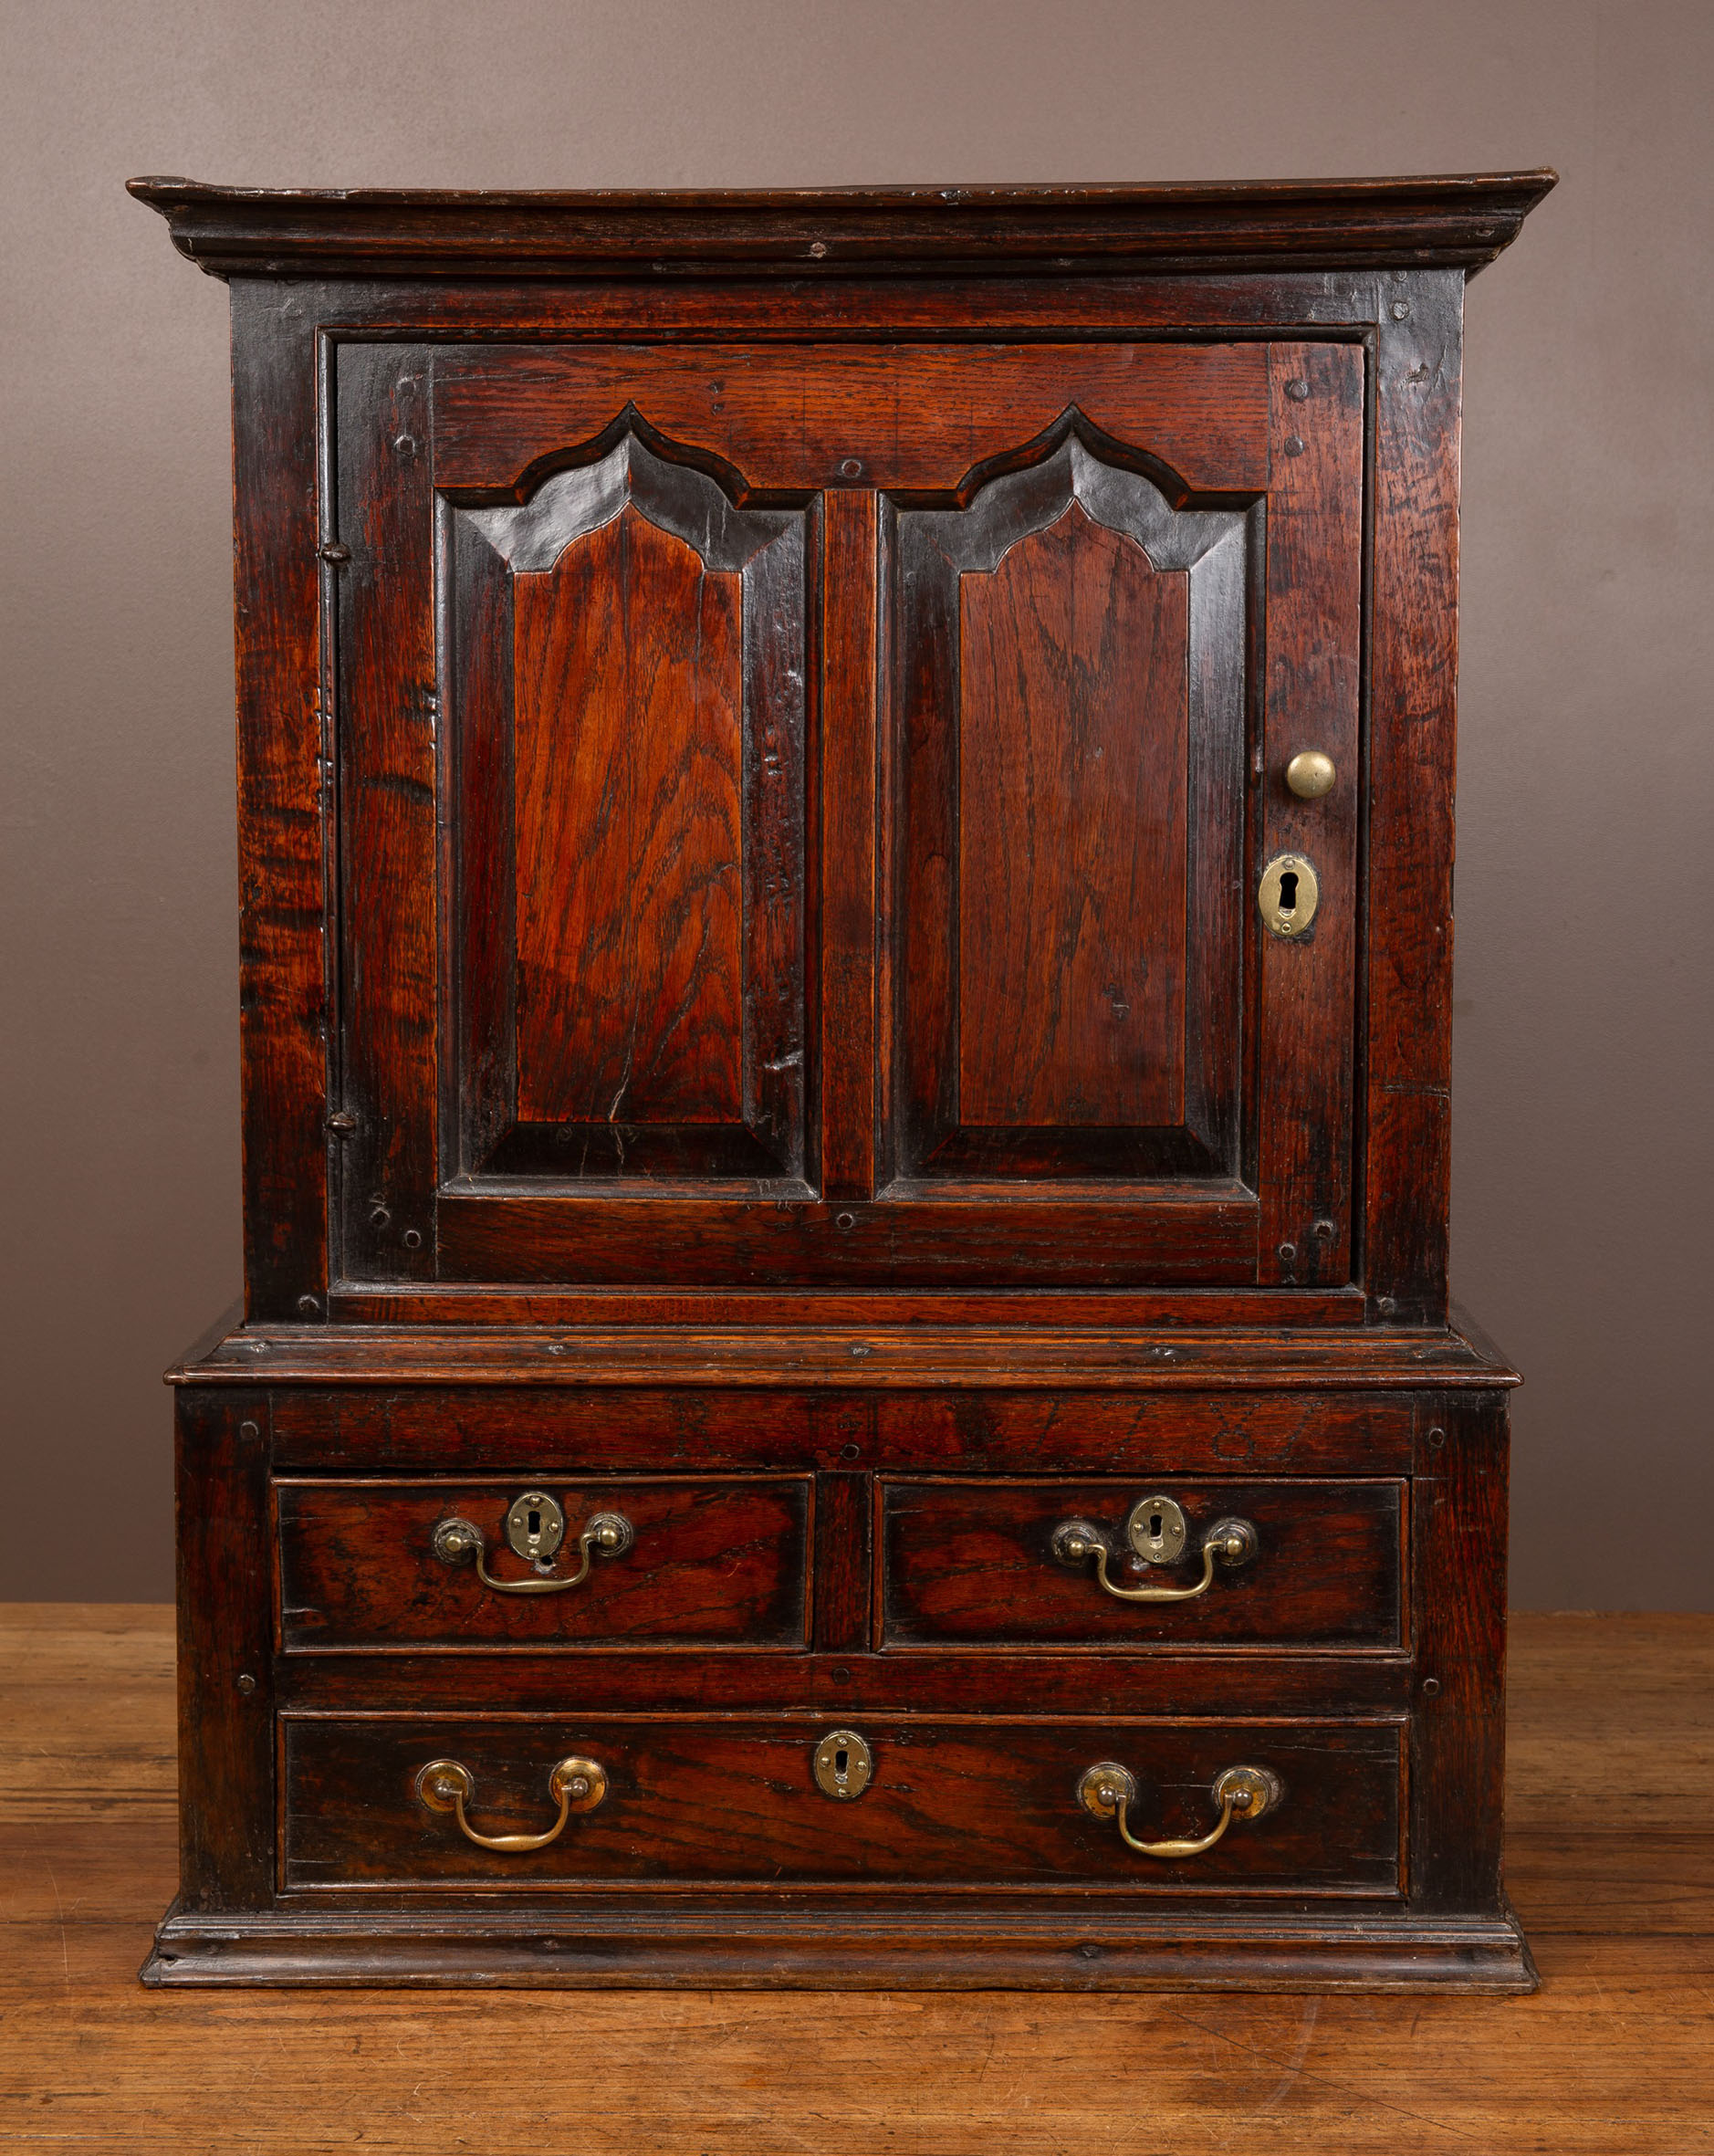 An antique late 18th-century Welsh oak cabinet